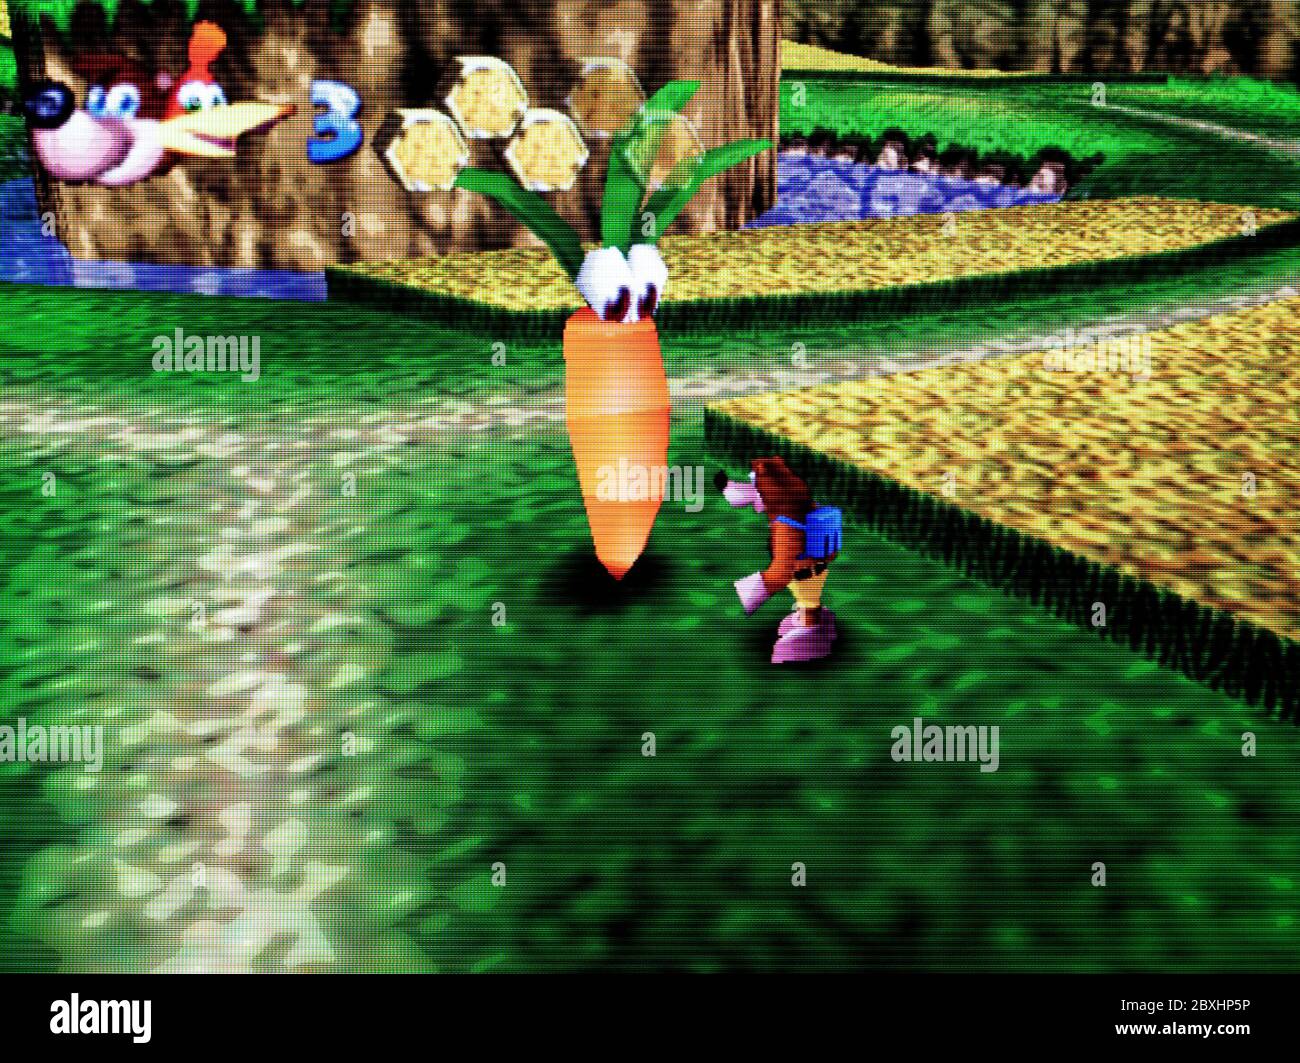 Banjo-Kazooie - Nintendo 64 Videogame - solo per uso editoriale Foto stock  - Alamy